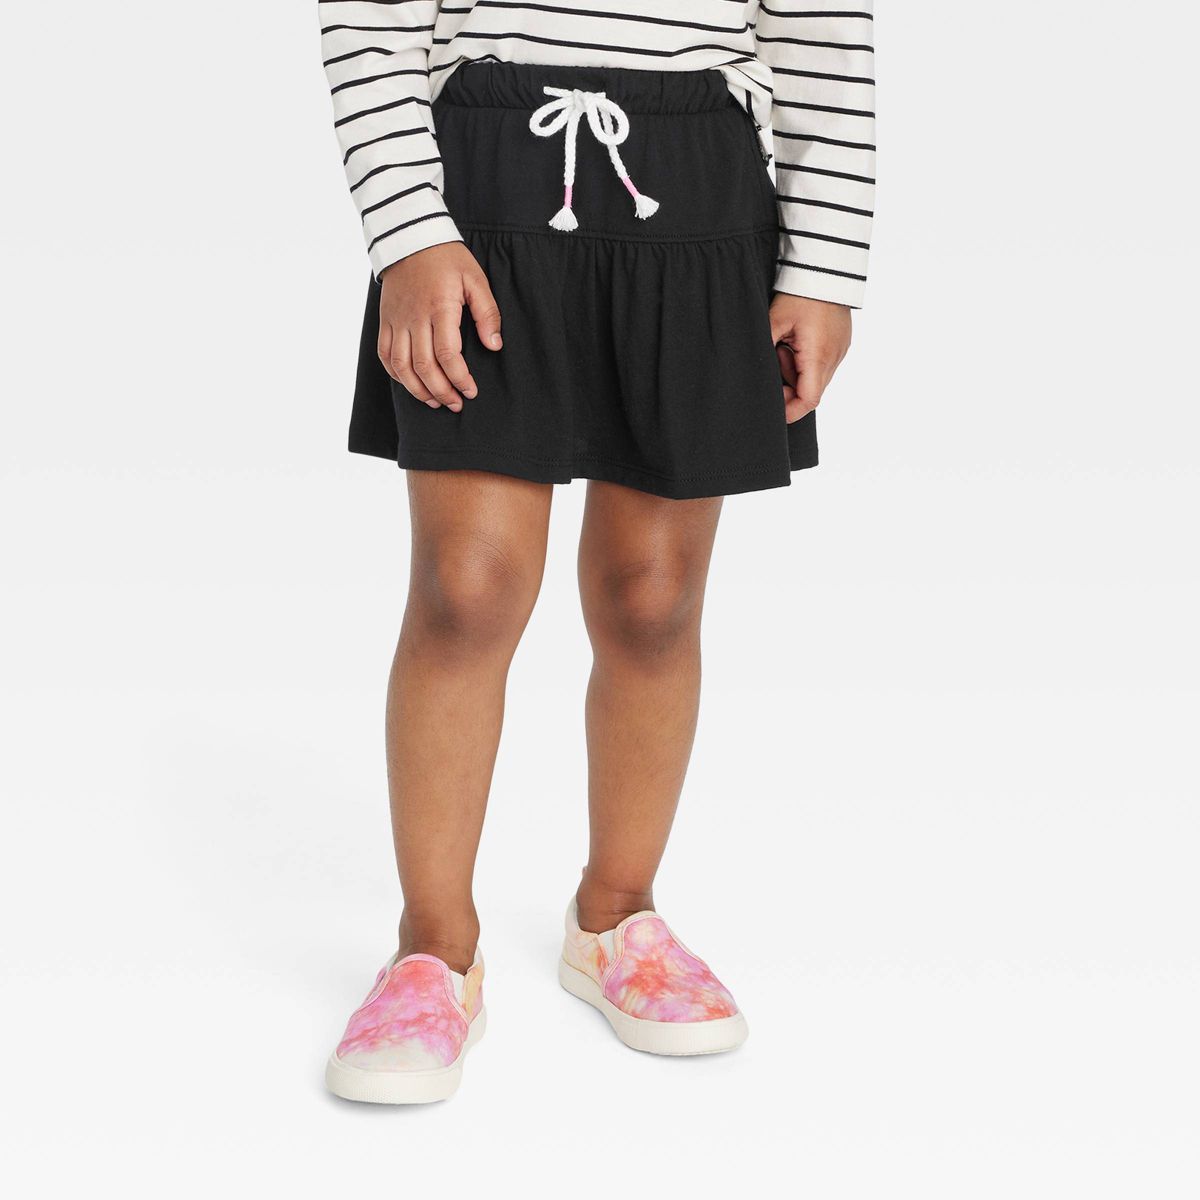 Toddler Girls' Knit Skirt - Cat & Jack™ | Target